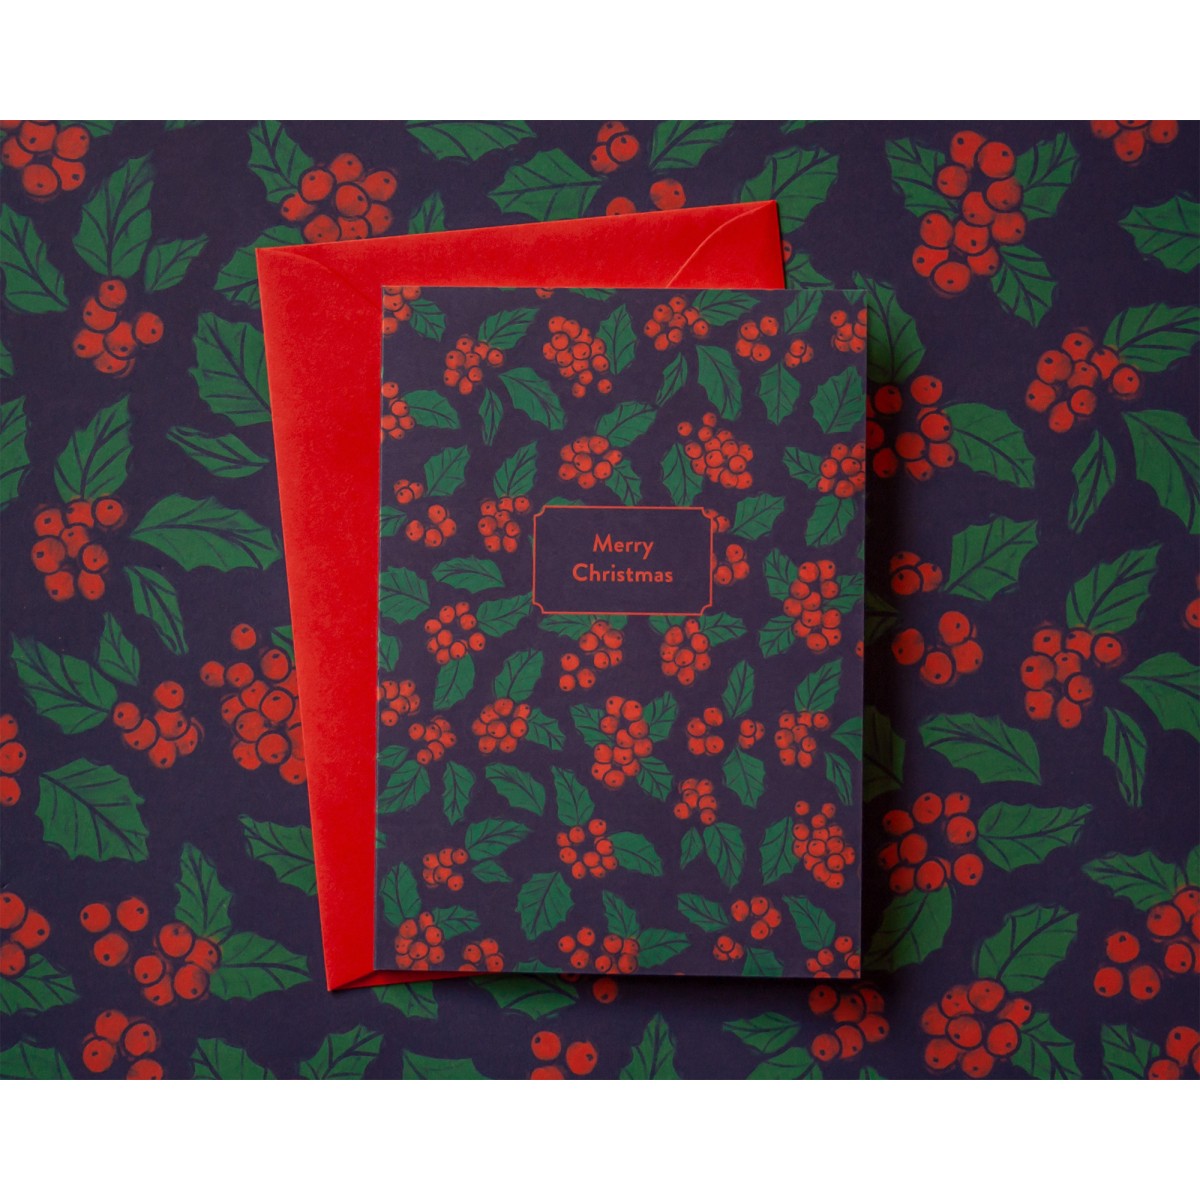 Weihnachtskarte »Merry Christmas« mit Stechpalmen-Muster // Papaya paper products